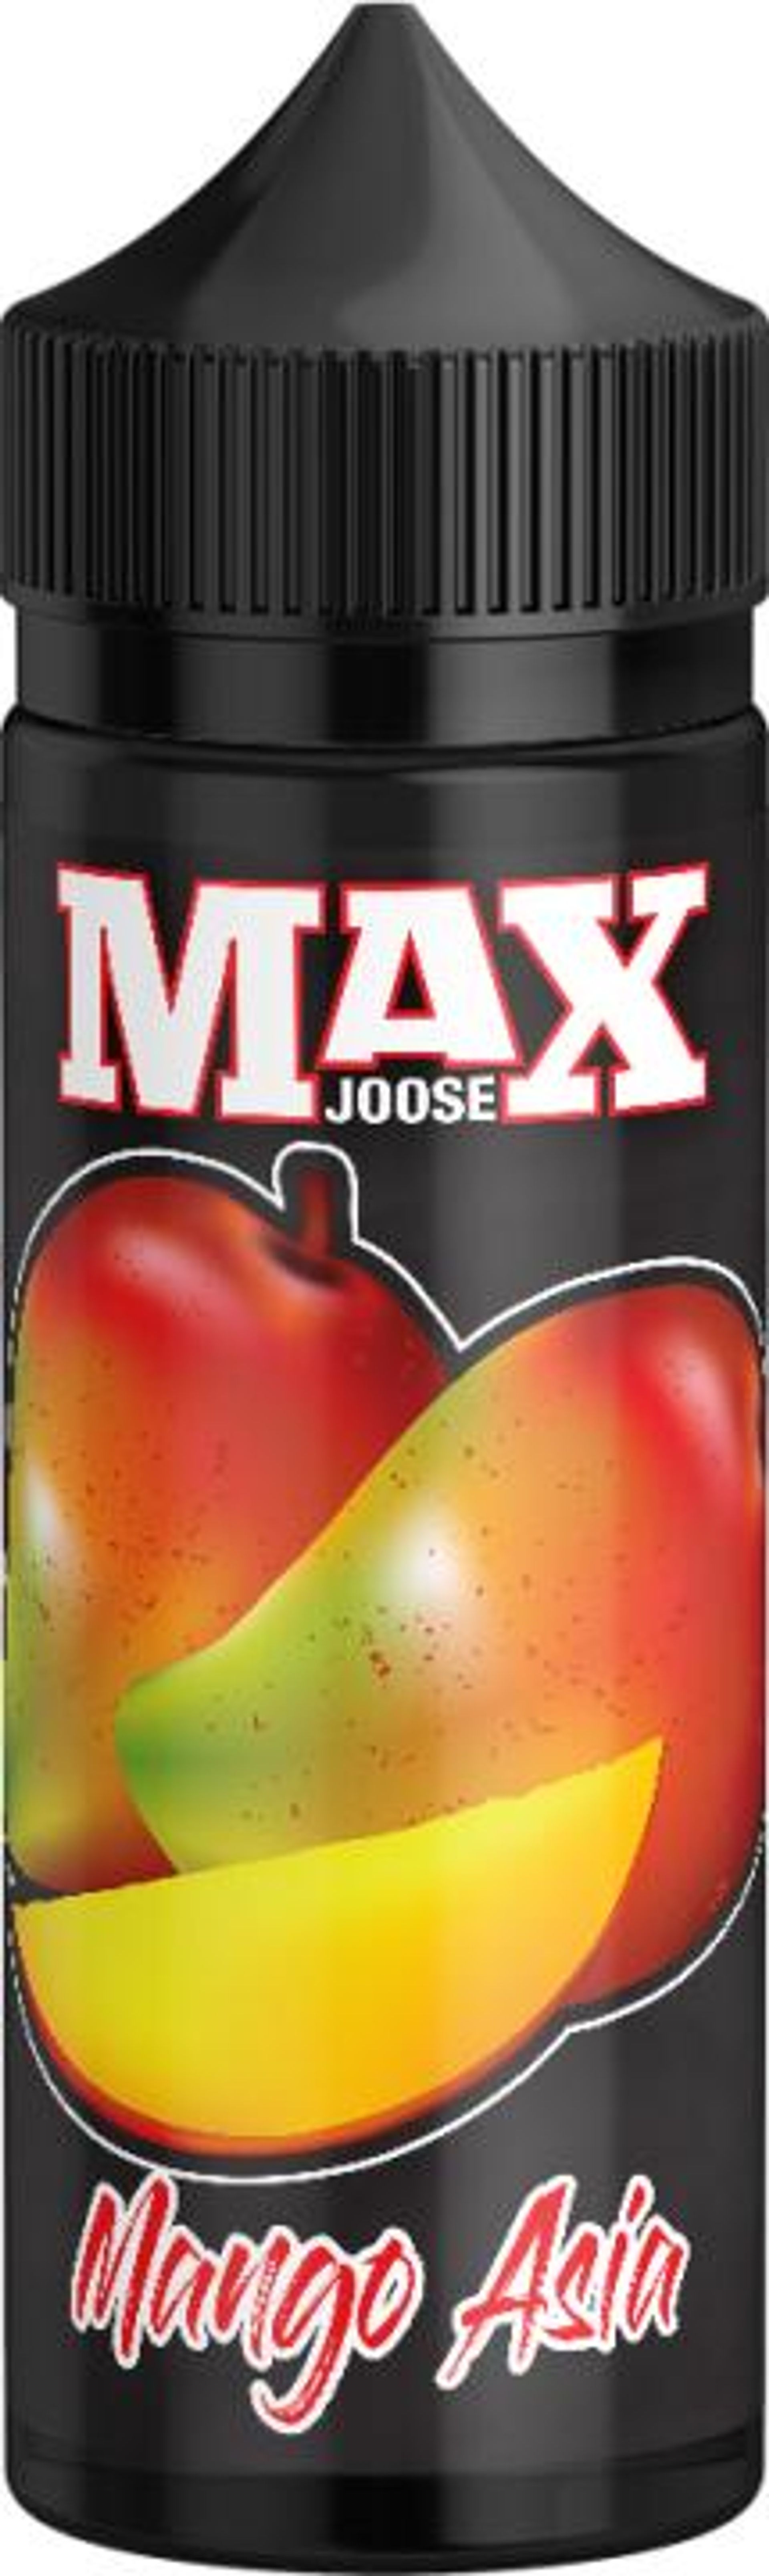 Image of Mango by Max Joose